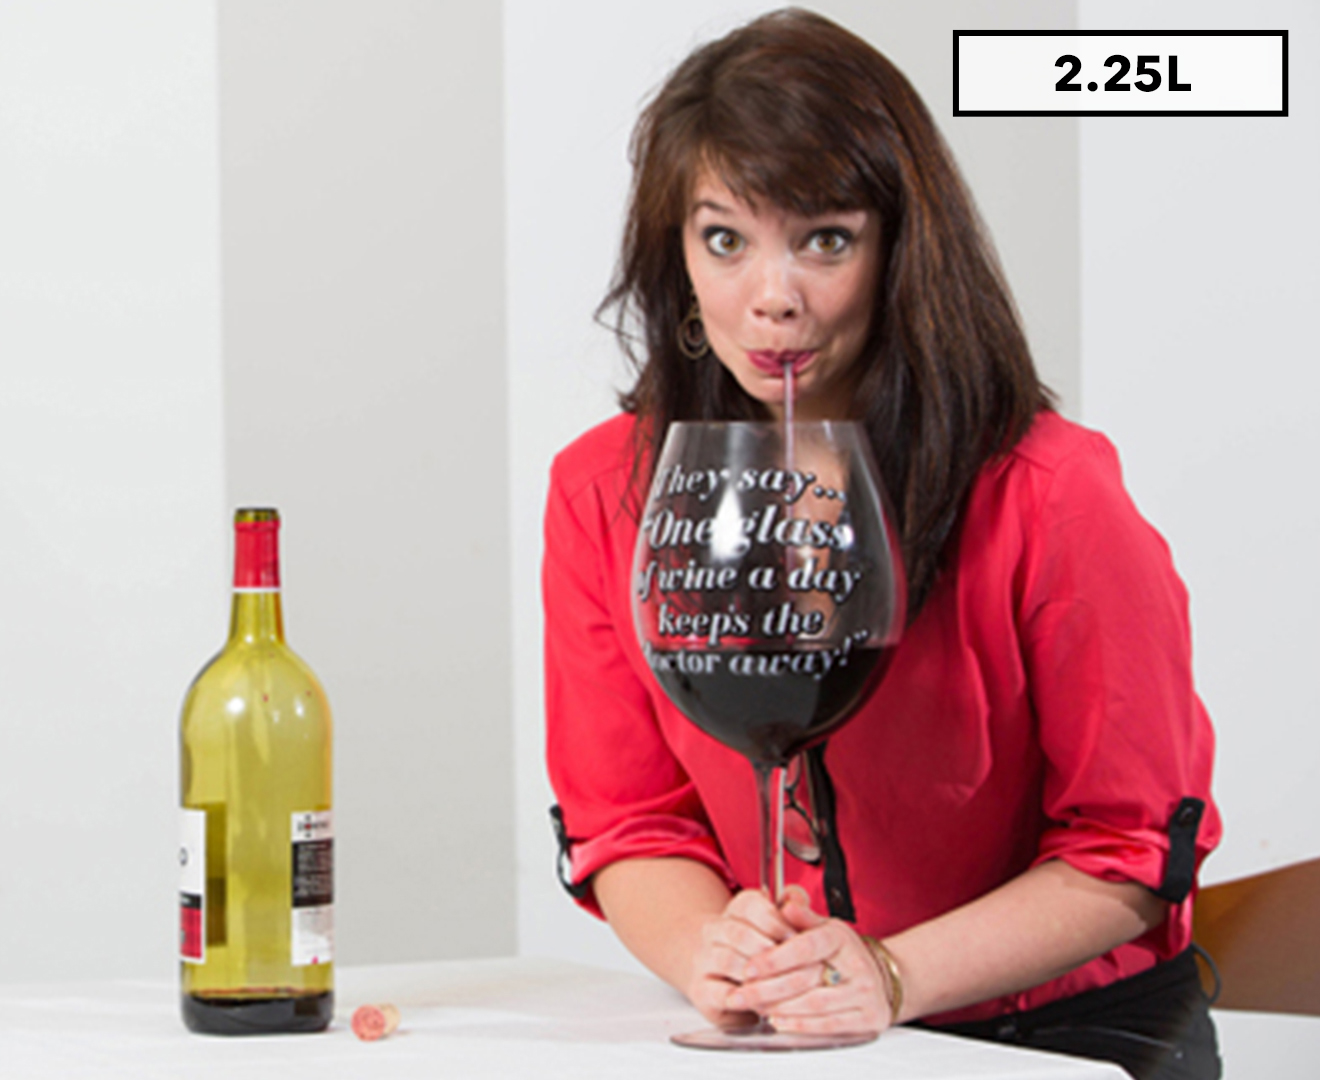 Бокал для вина литр. Огромный бокал. Большой бокал для вина. Бокалы для вина большие. Огромный бокал вина.